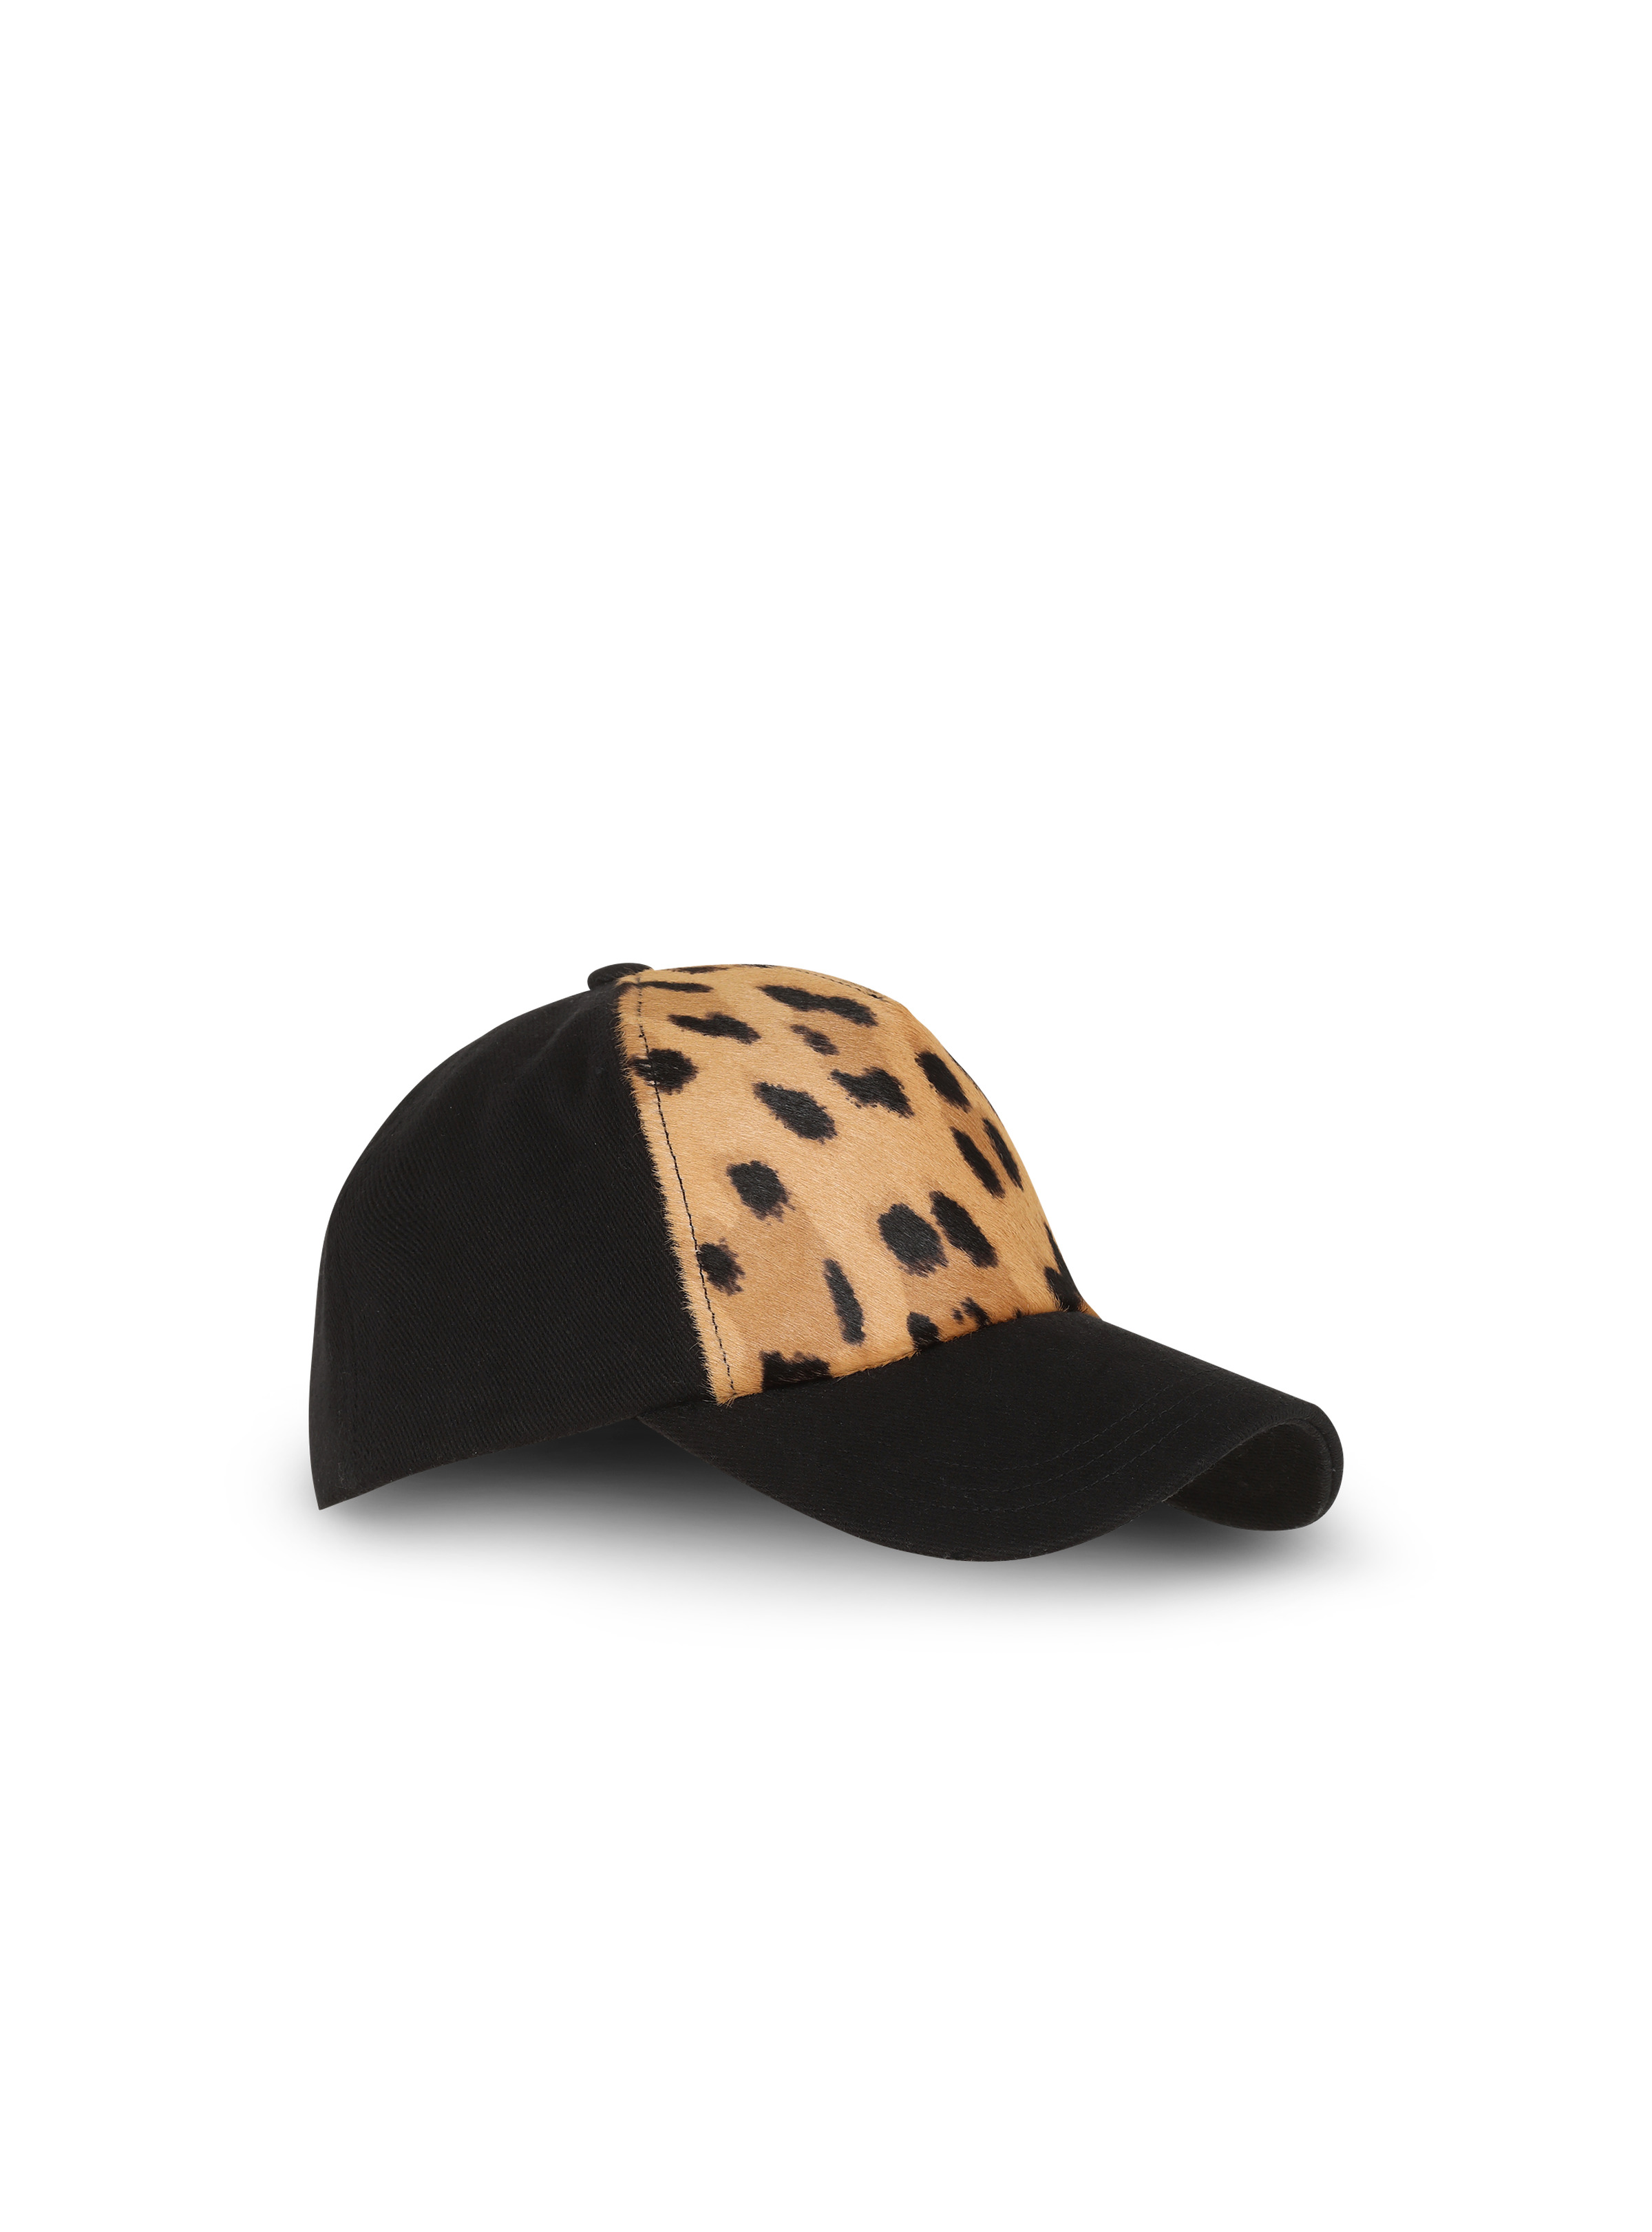 Leopard print leather cap - 3